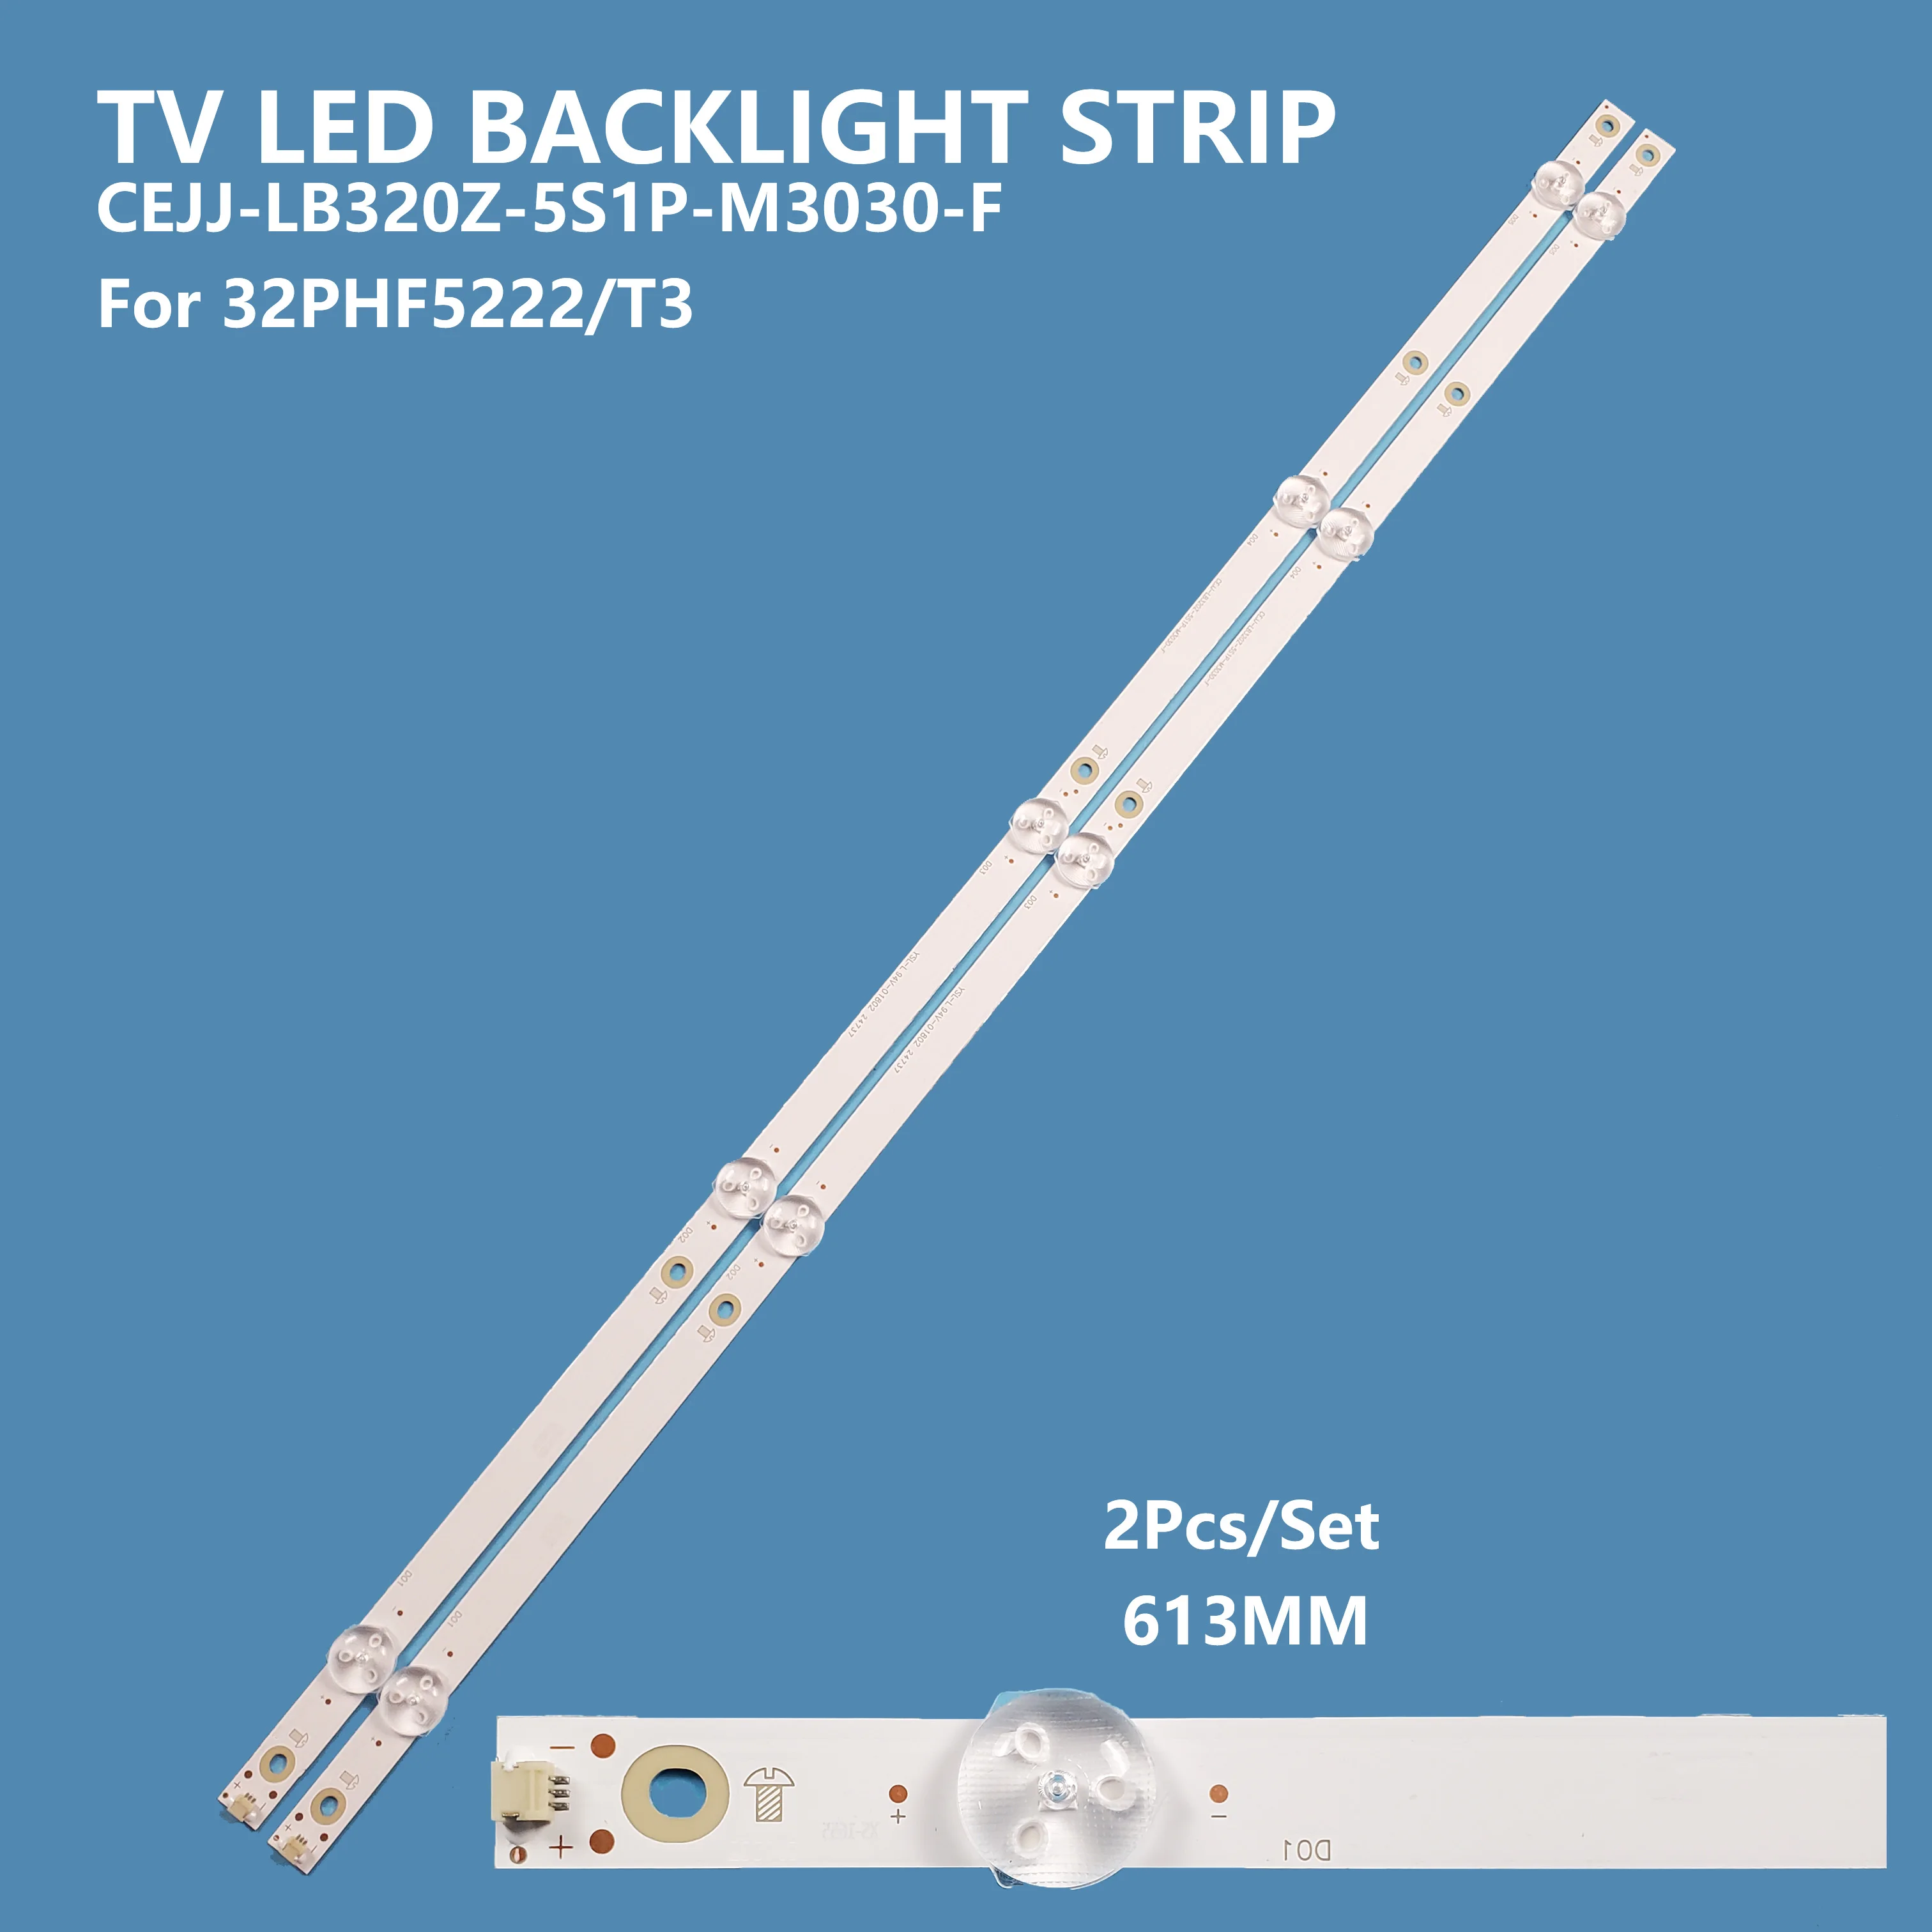 2PCS/set New Arrival TV Led Backlight Strip CEJJ-LB320Z-5S1P-M3030-F For PHILIPS 32inch 32PHF5222/T3 tv Bar Light Accessories 2pcs 3v 7 light 457mm led backlight strips for haier le24b8000t led236d7 01 b 30323607206 tf led24s38t2 ple 2405hd 30323607206